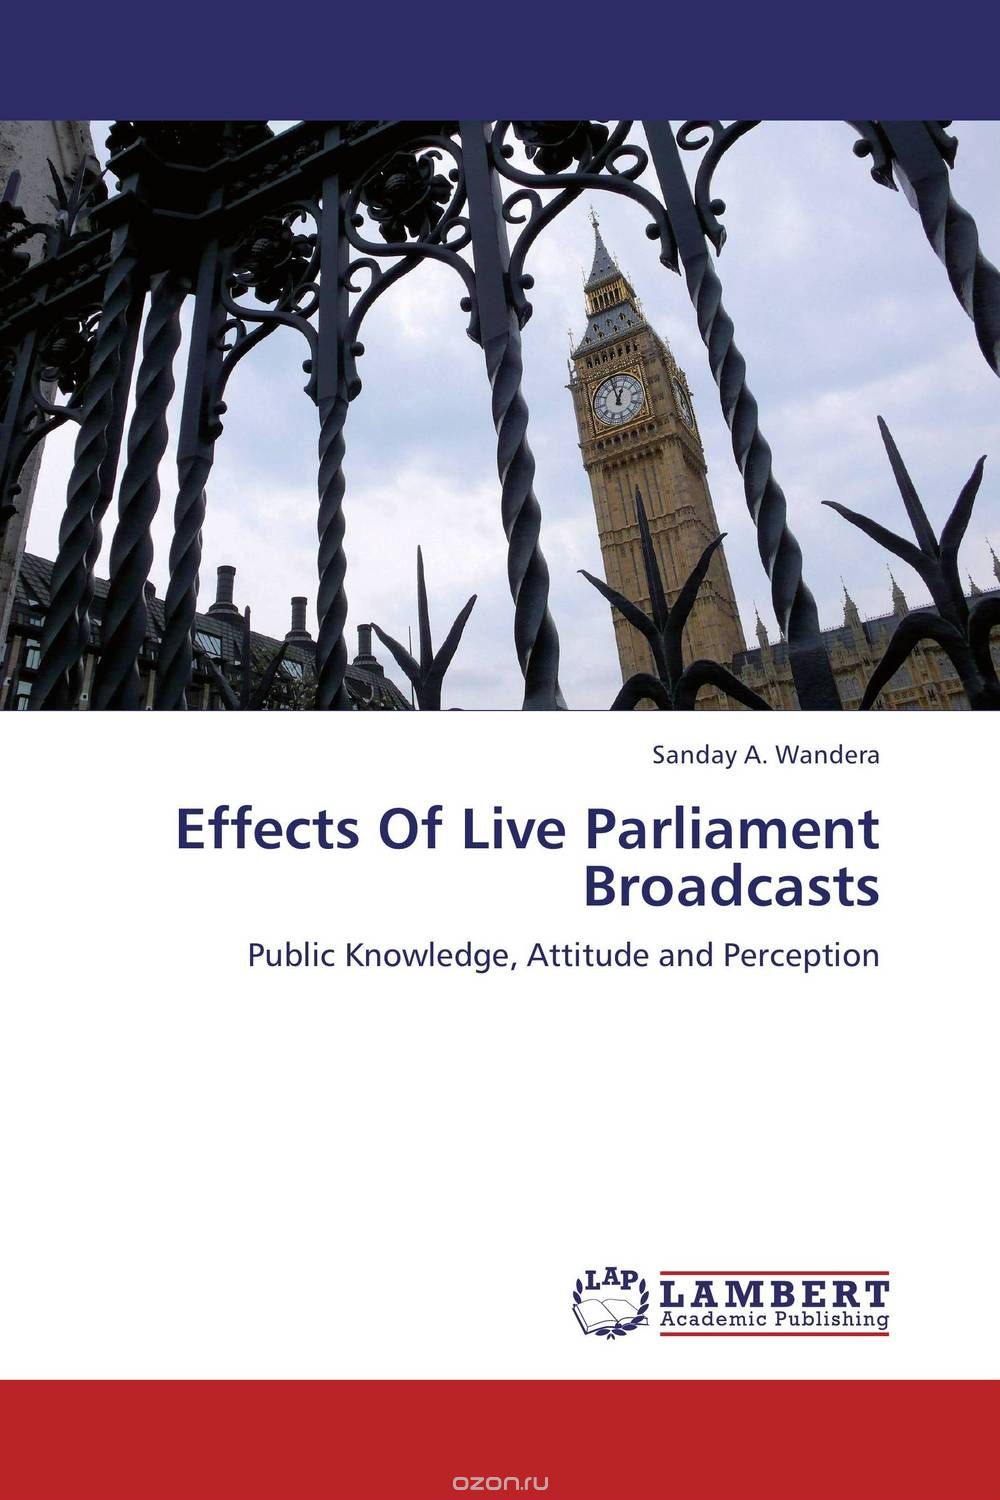 Скачать книгу "Effects Of Live Parliament Broadcasts"